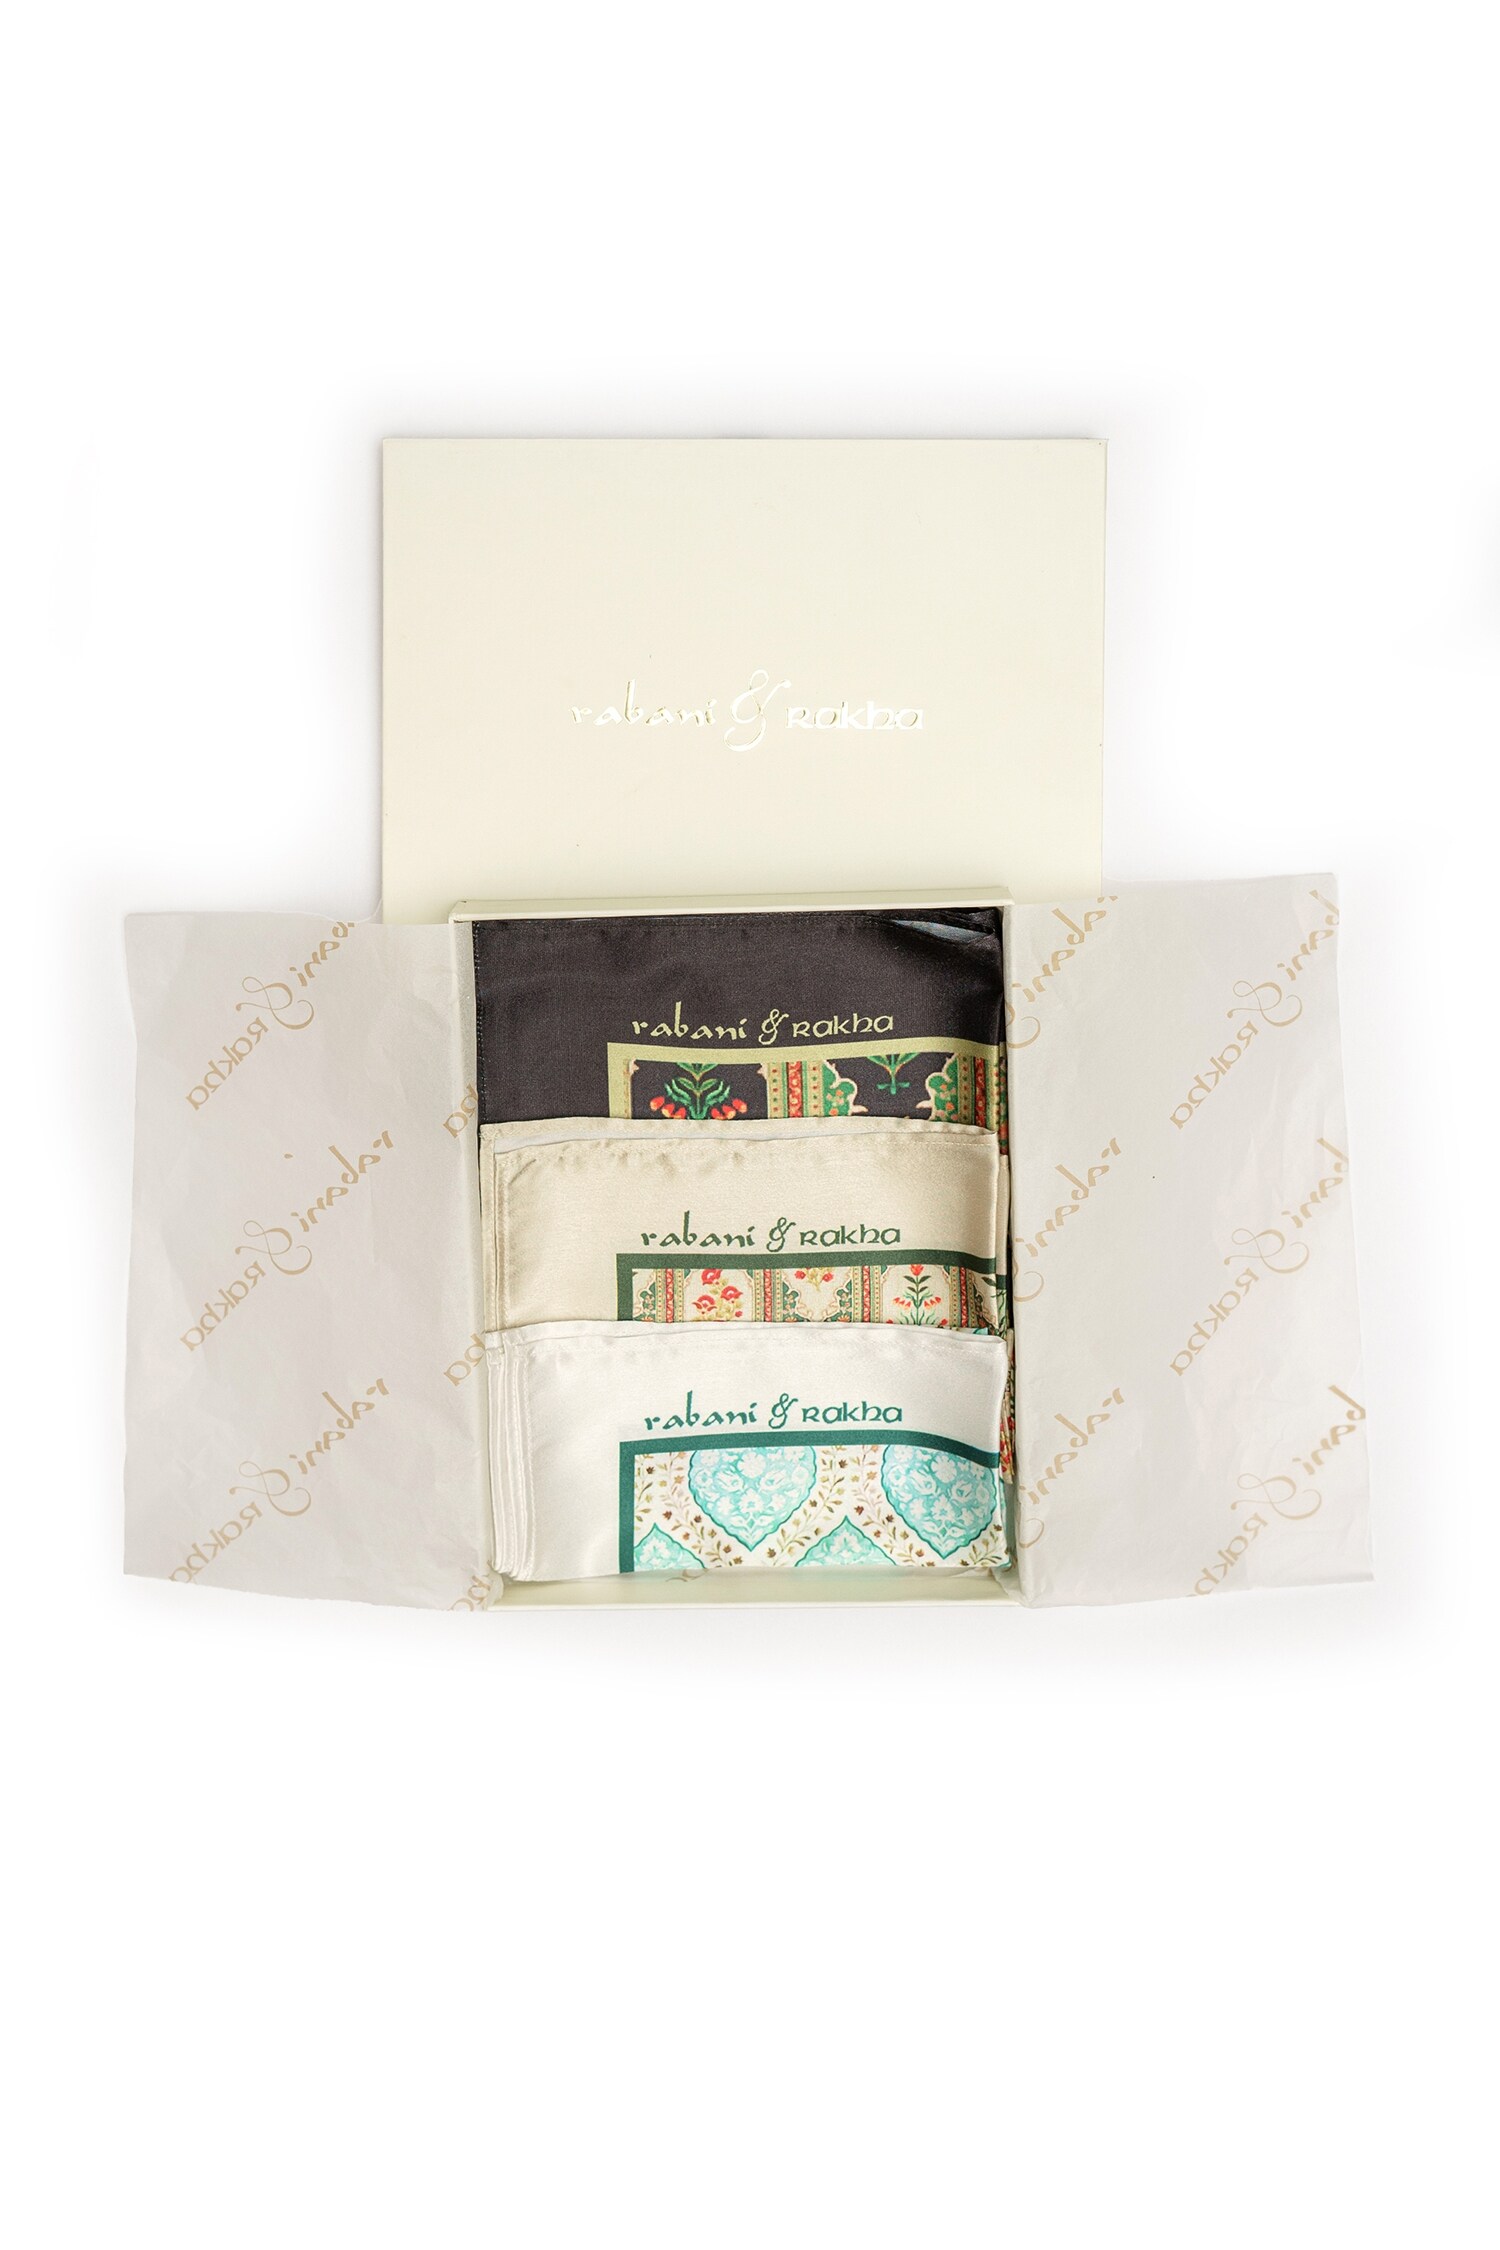 Rabani & Rakha Multi Color Printed Flower Pattern Pocket Square Gift Box - Set Of 3